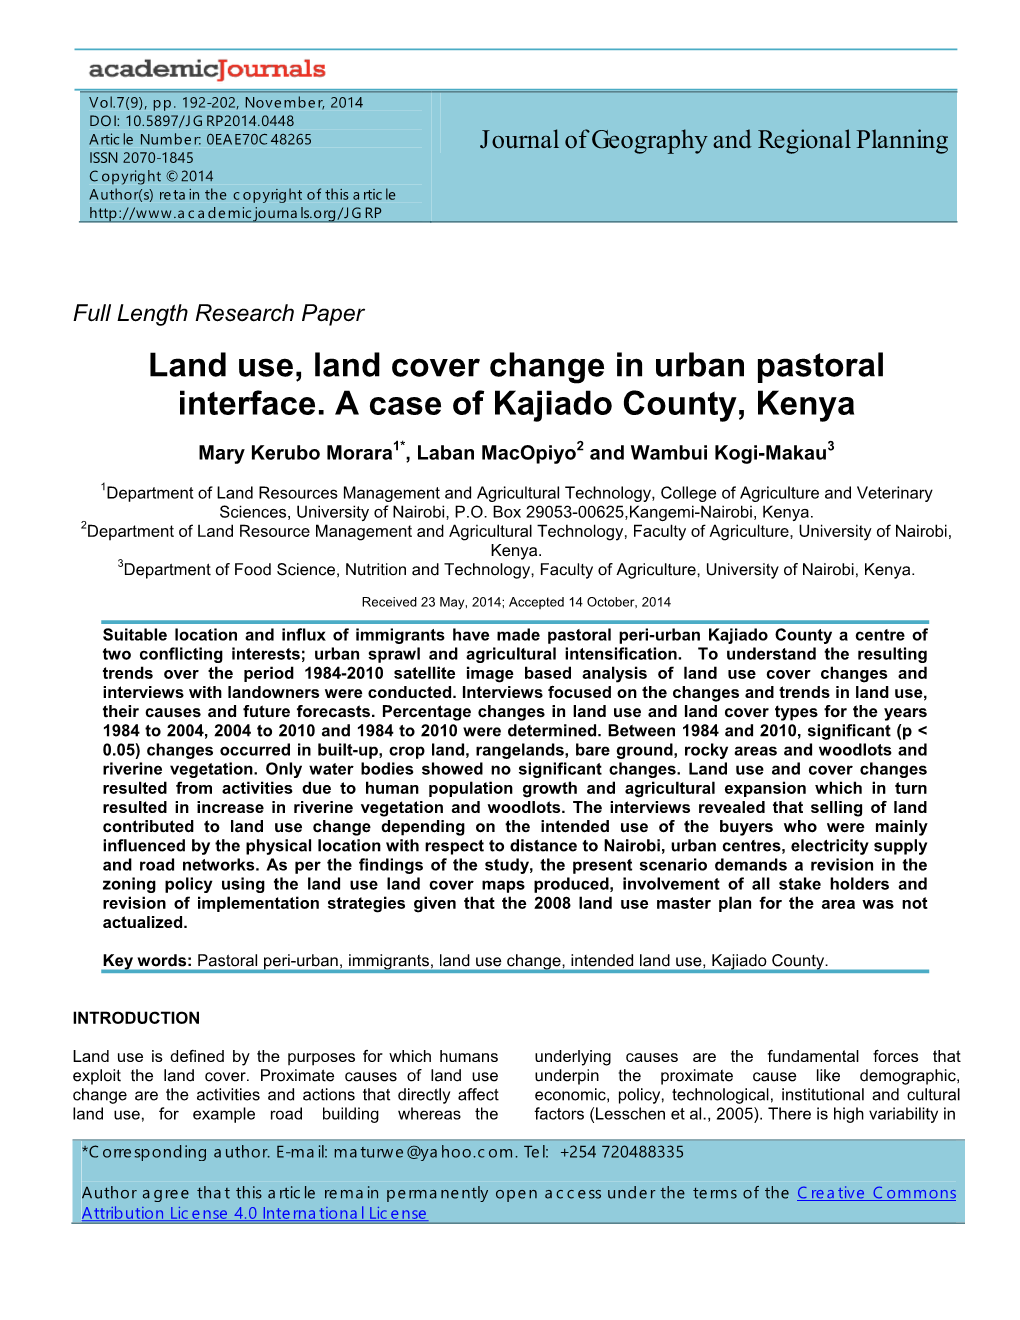 Land Use, Land Cover Change in Urban Pastoral Interface. a Case of Kajiado County, Kenya